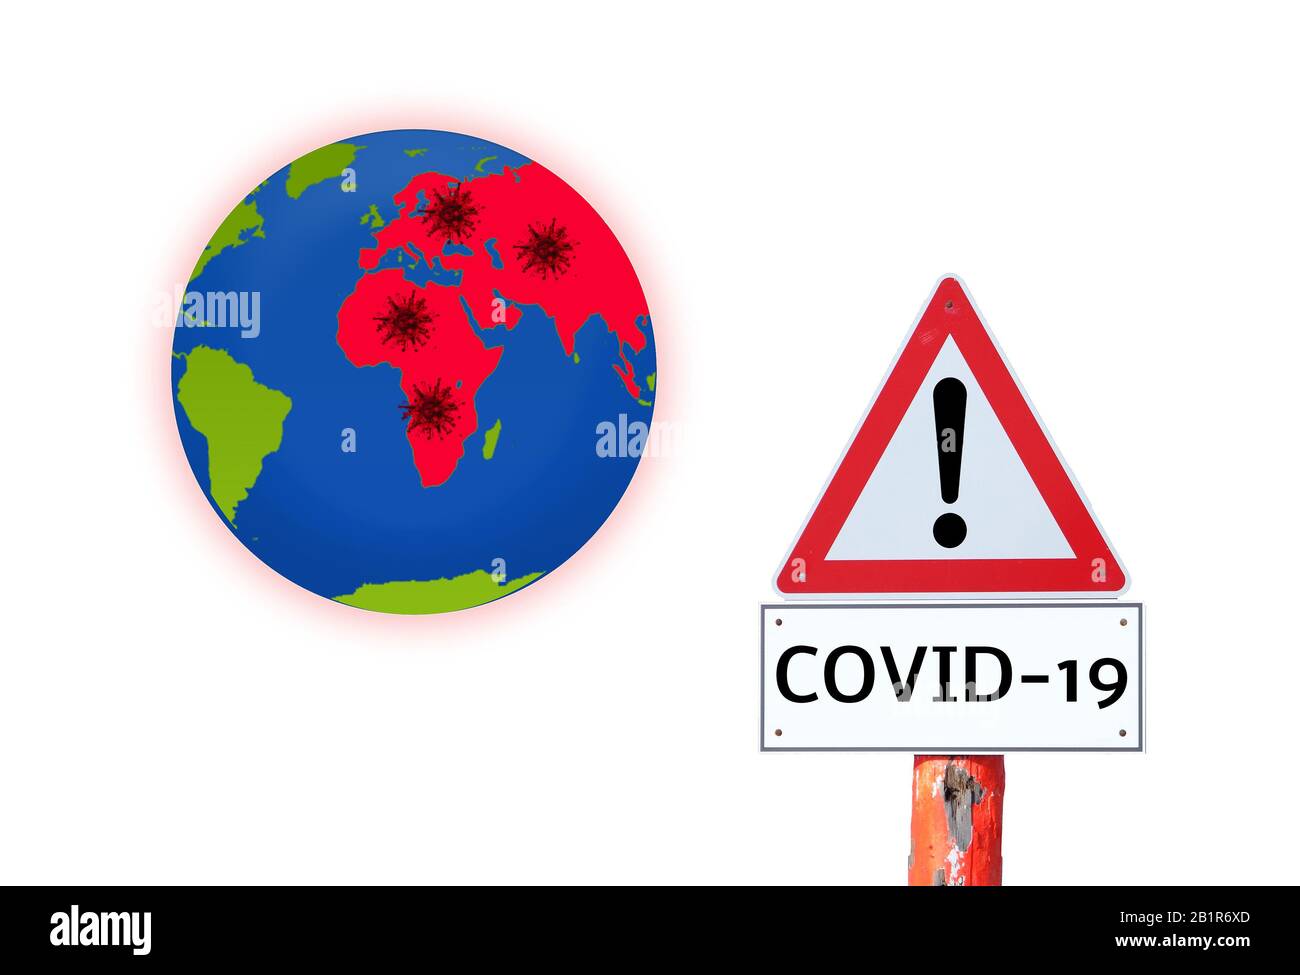 Warning sign coronavirus COVID-19 spread symbolically Stock Photo